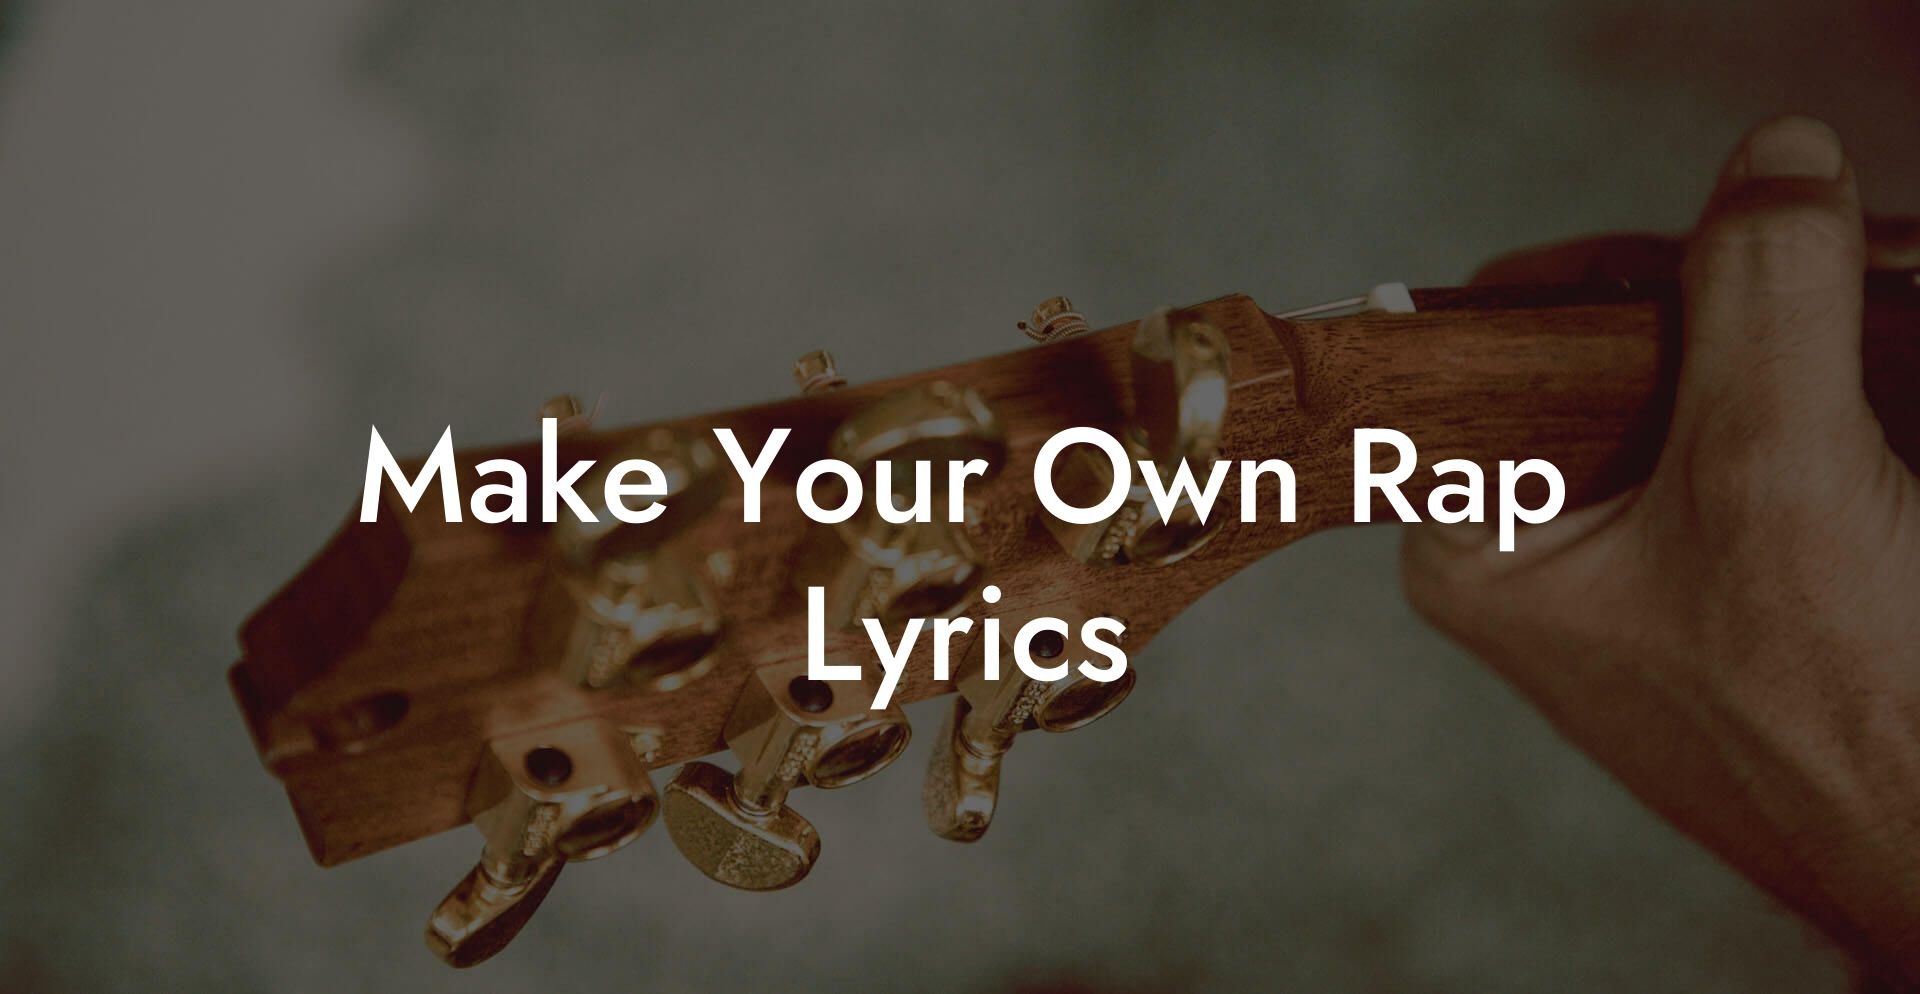 make your own rap lyrics lyric assistant